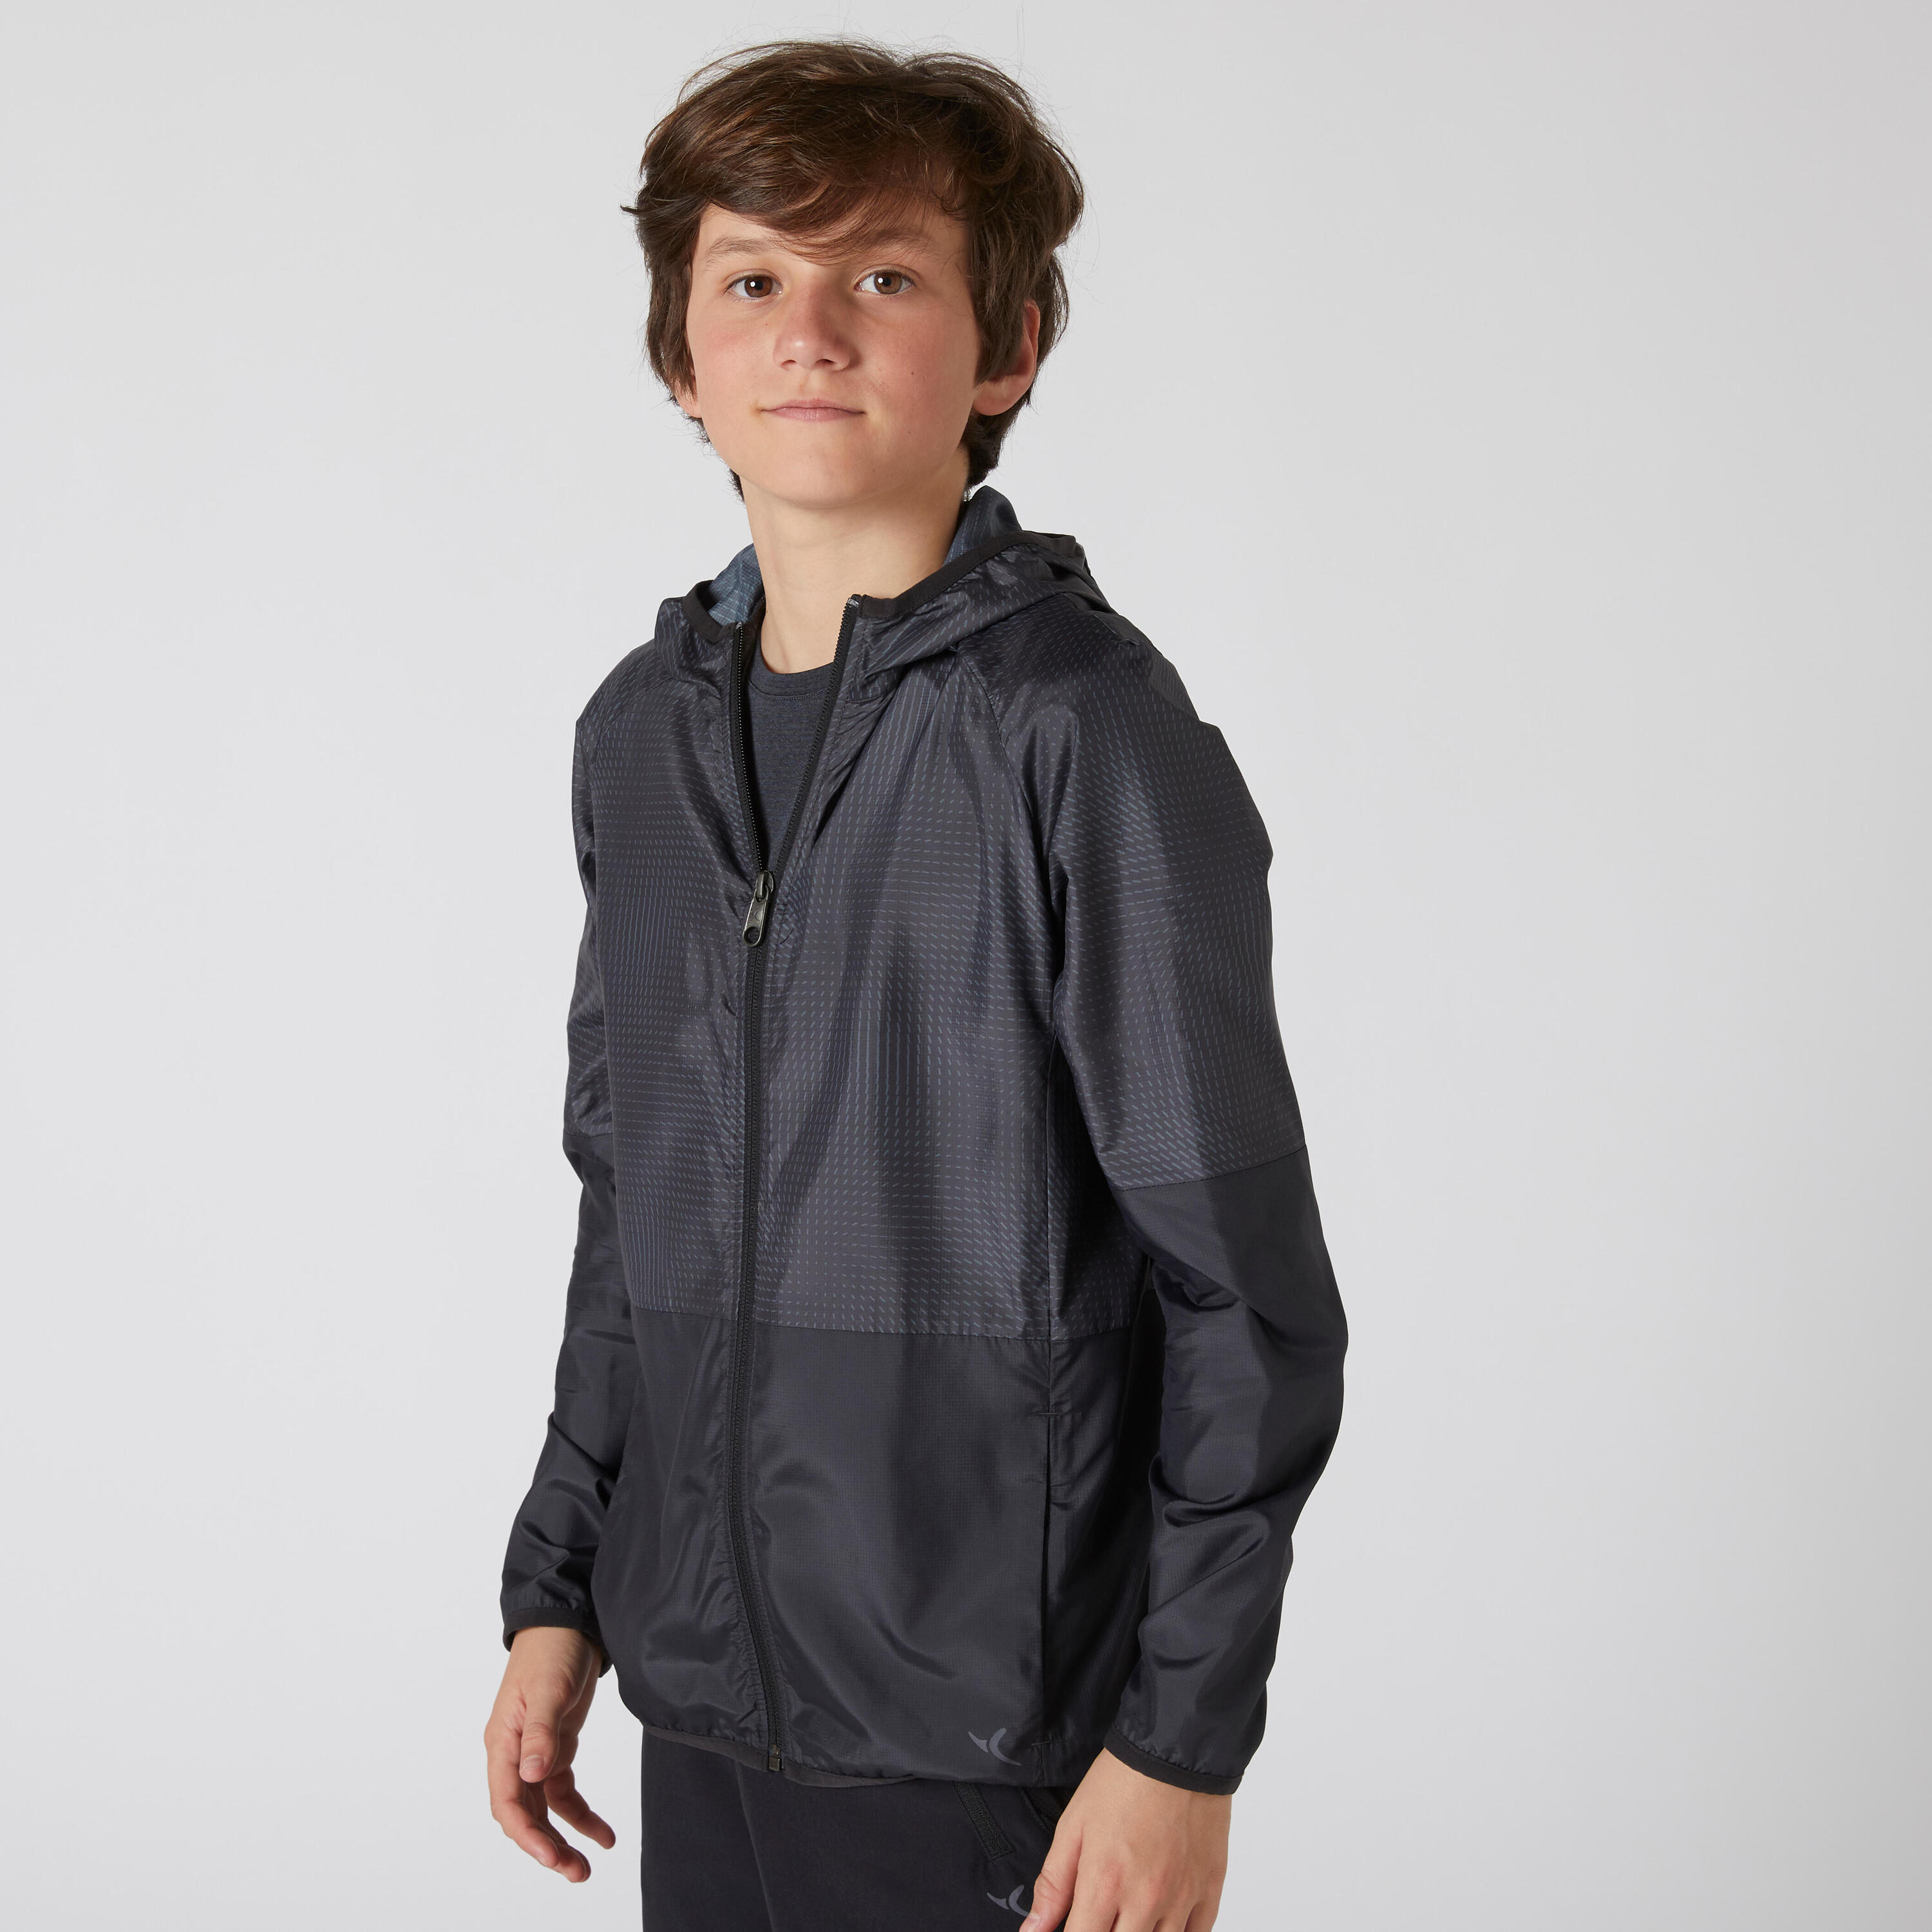 DOMYOS Kids' Ultra-Lightweight Compact Breathable Jacket - Black Print